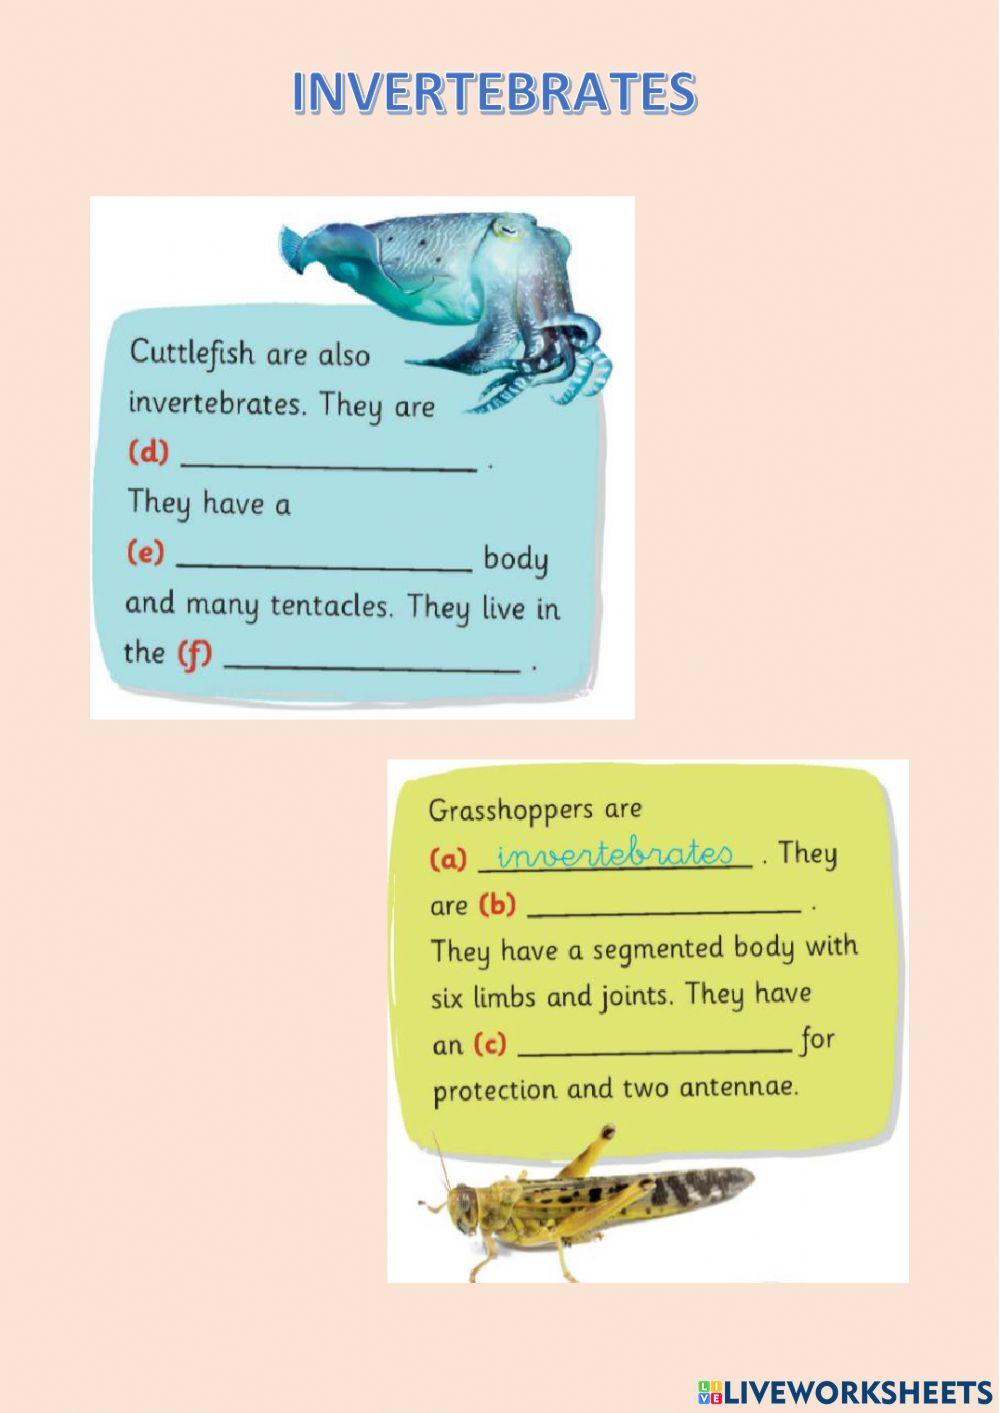 Invertebrates text